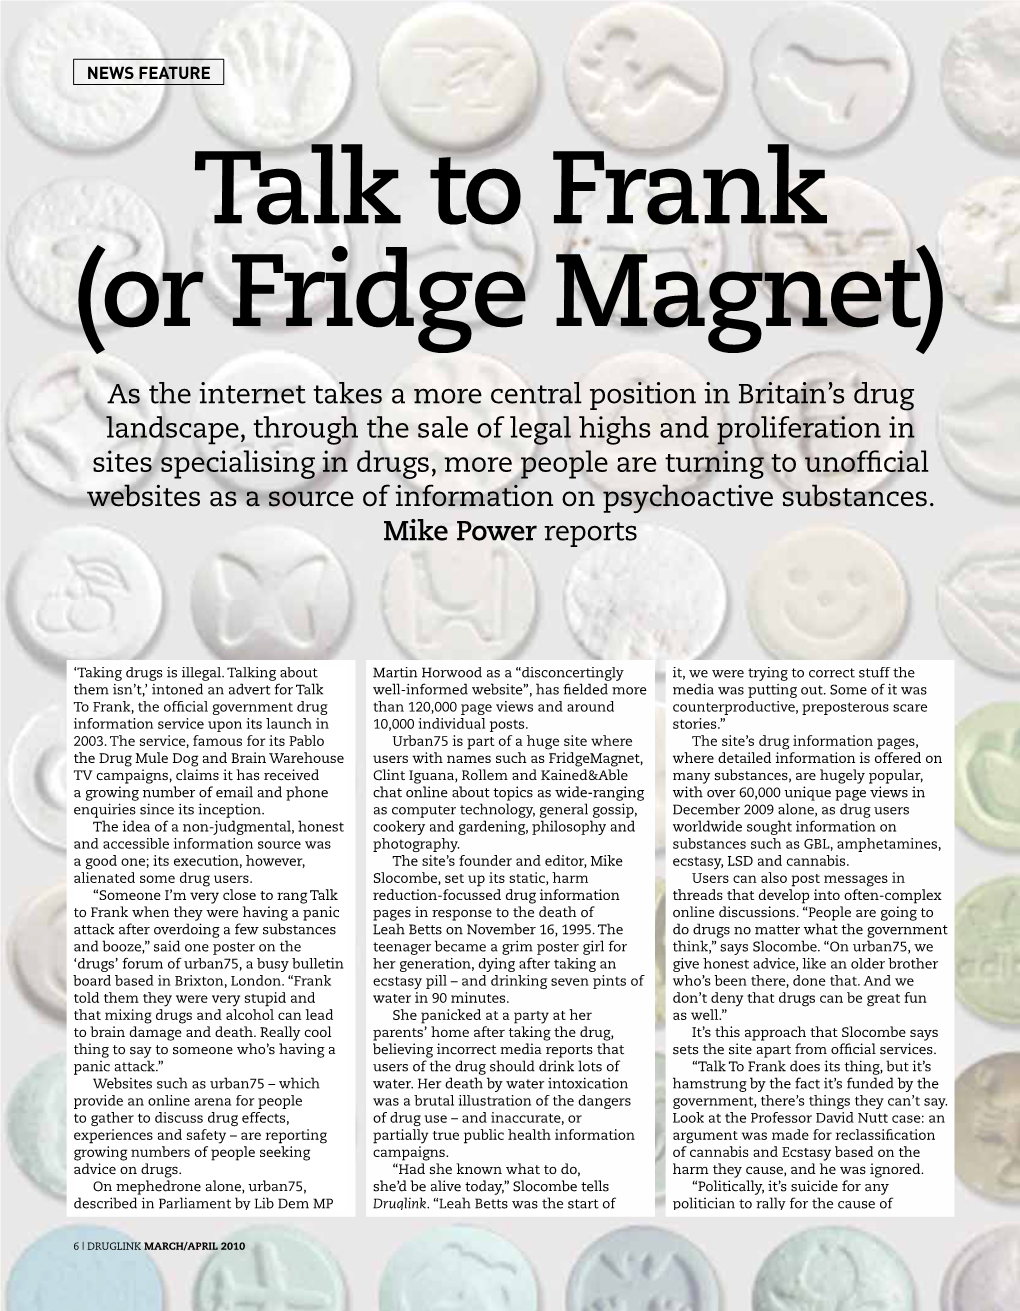 Talk to Frank (Or Fridge Magnet)